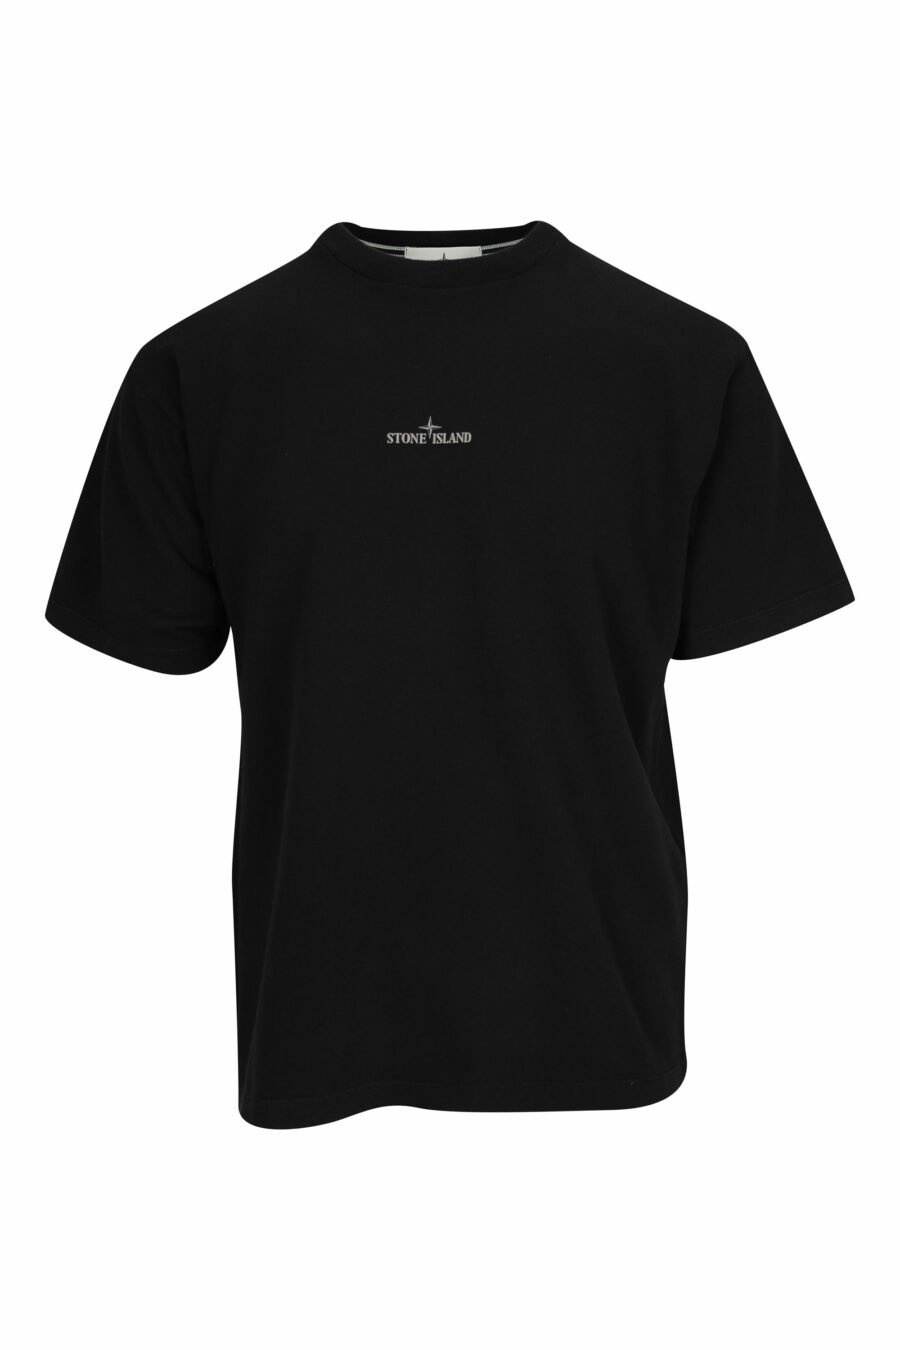 Camiseta negra con logo pequeño delante - 8052572910081